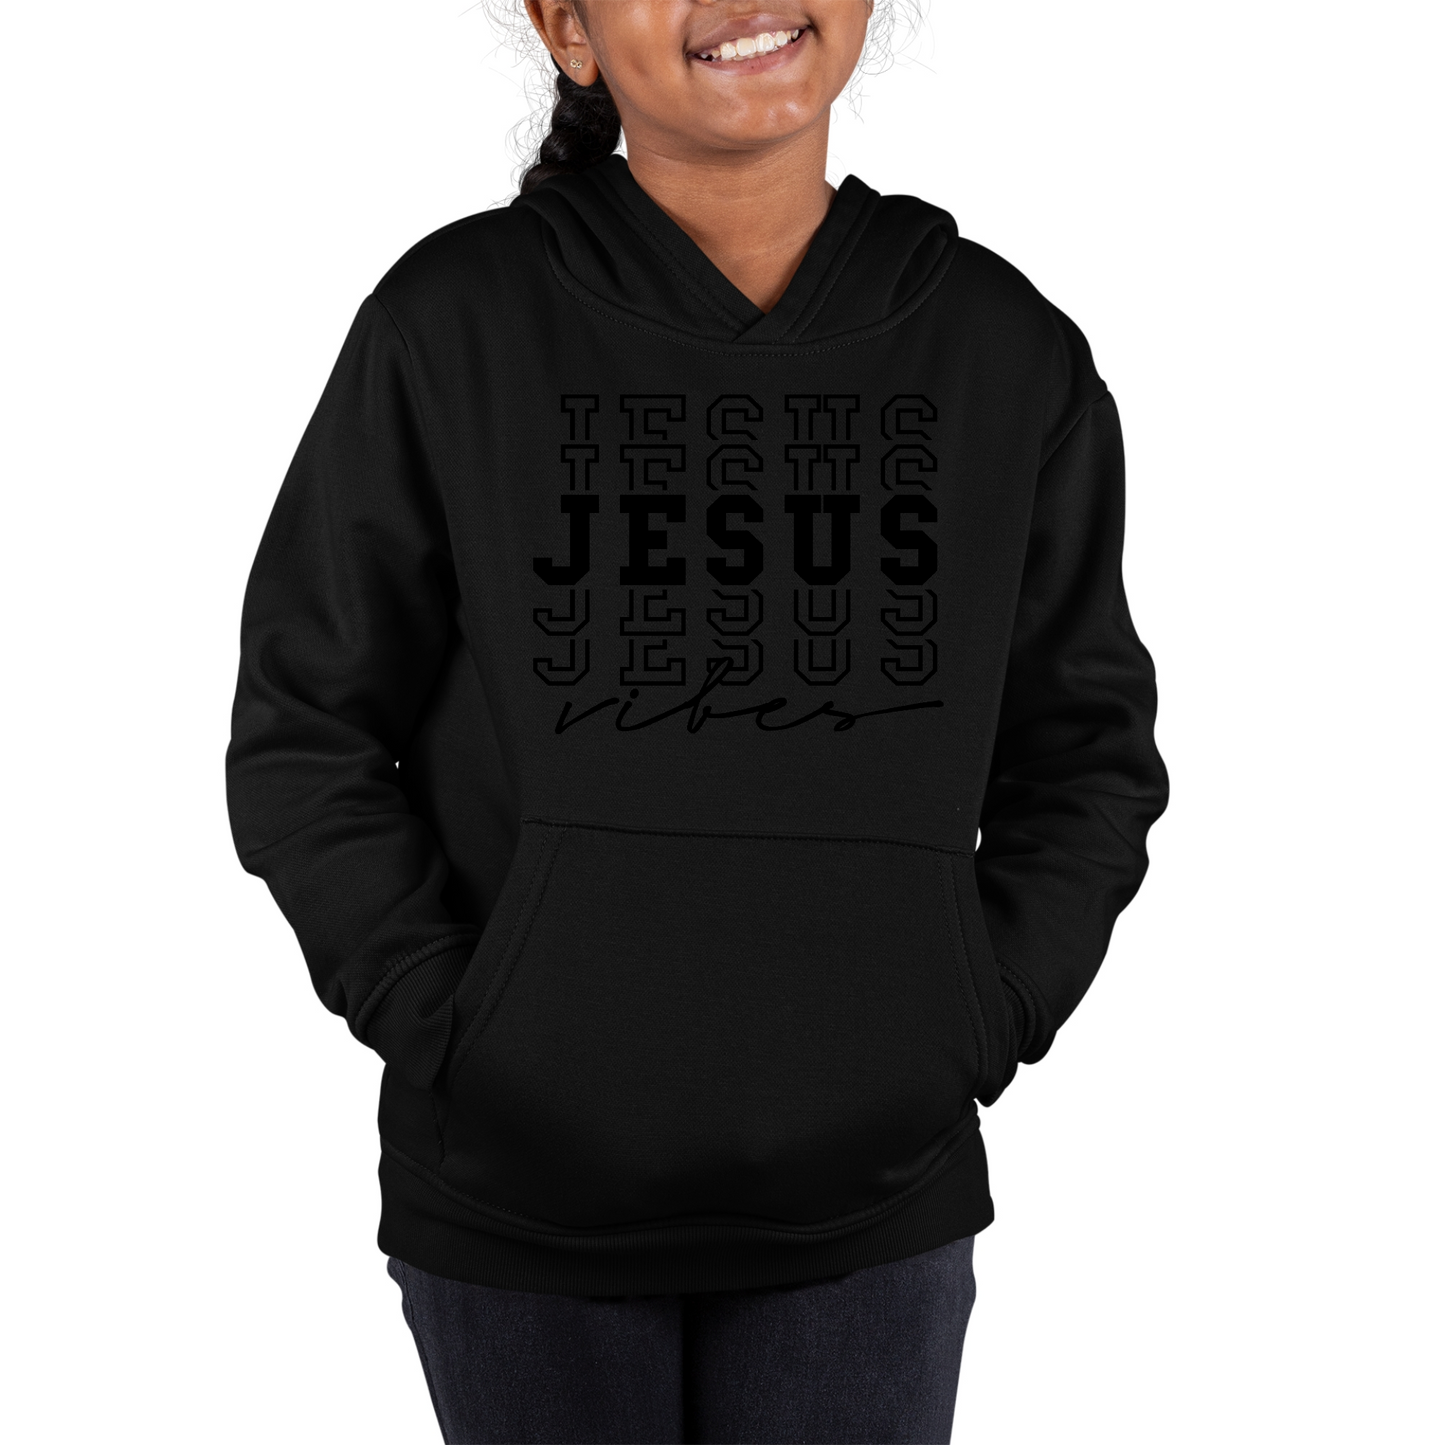 Girls Long Sleeve Hoodie Jesus Vibes Christian Inspiration